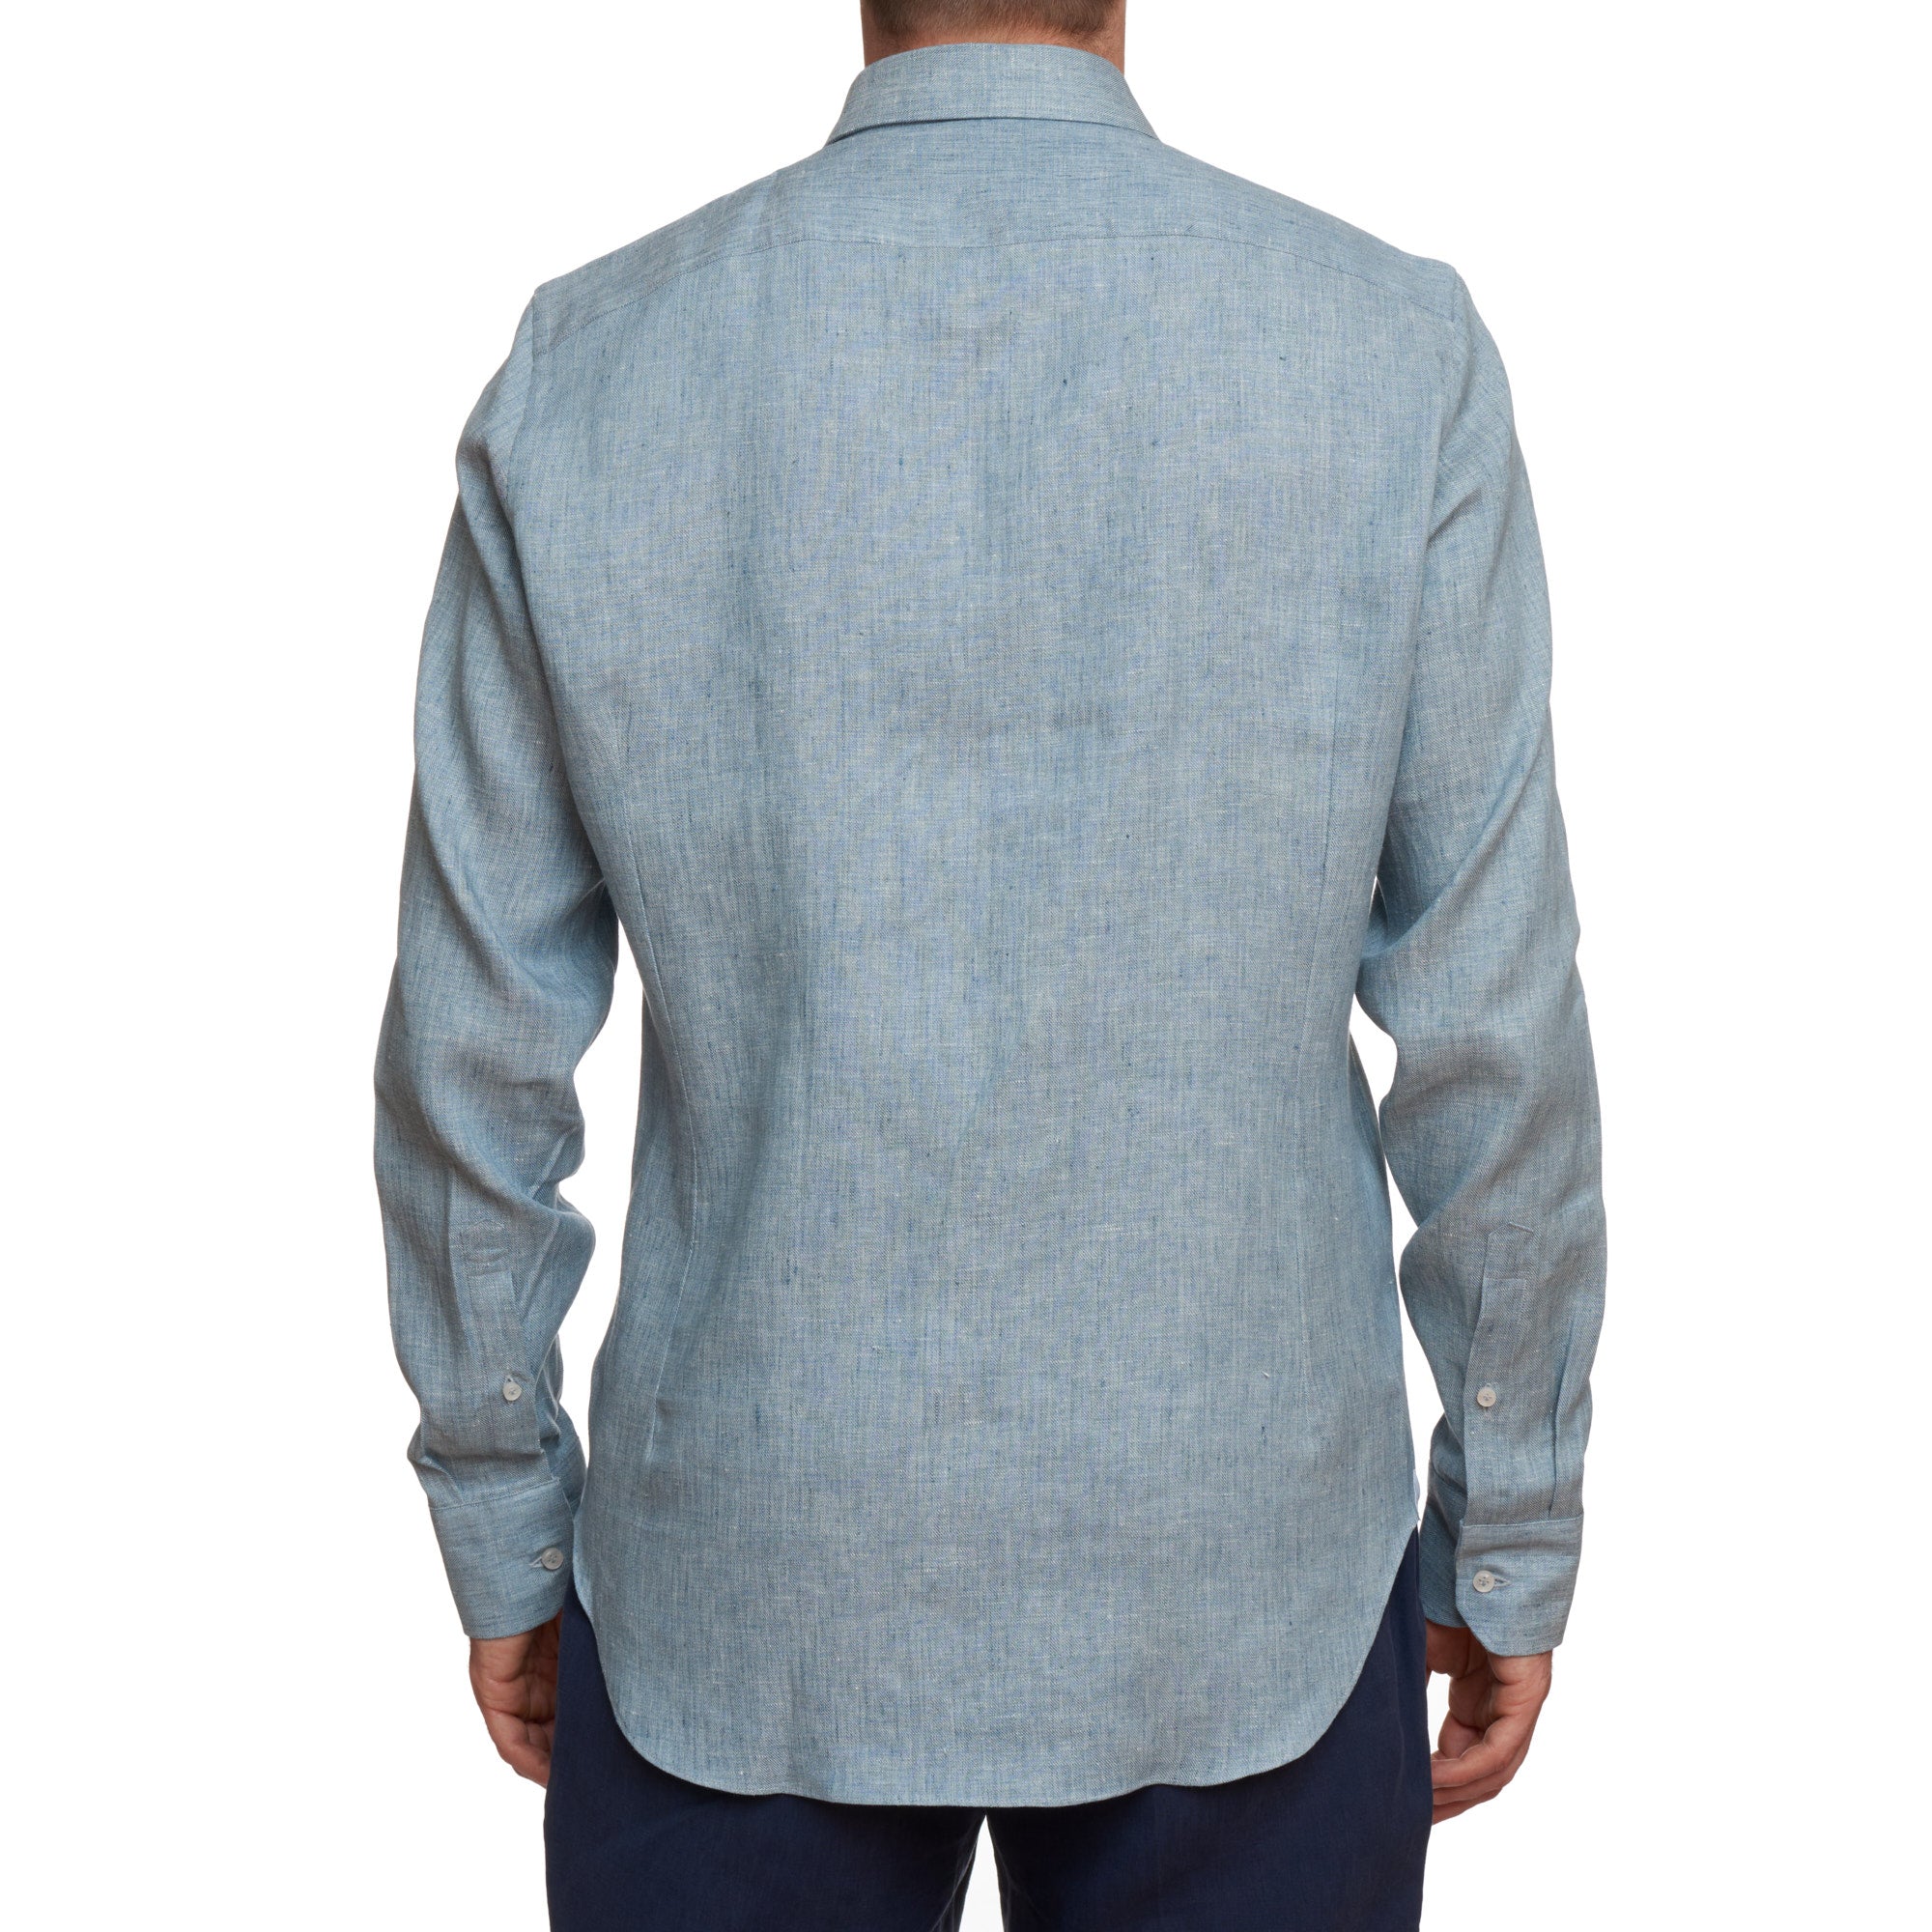 SARTORIO Napoli by KITON Blue Linen Spread Collar Slim Fit Dress Shirt NEW SARTORIO